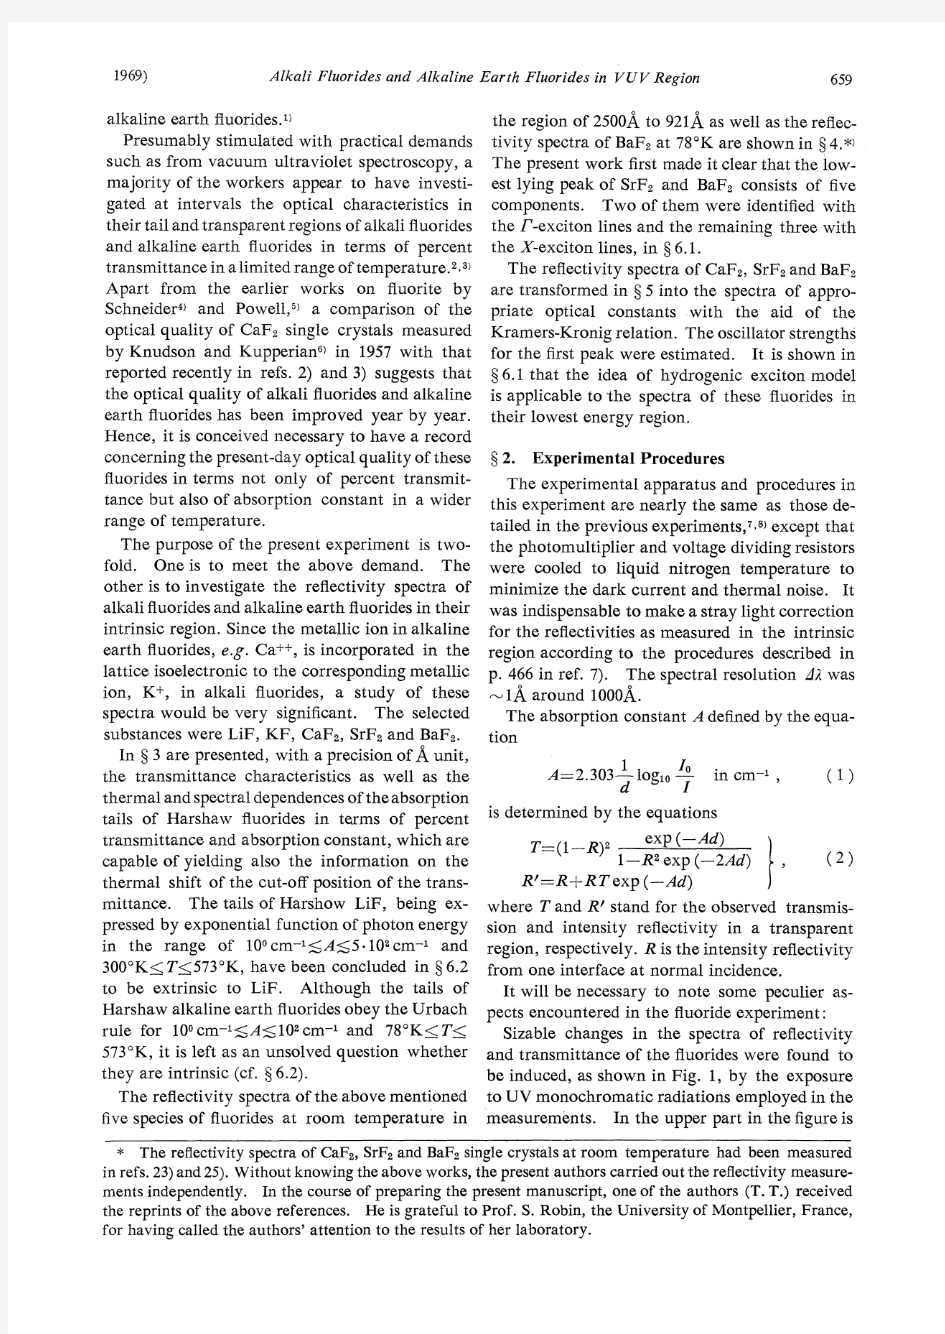 1969_Optical_studies_of_alkali_fluorides_and_alkaline_earth_fluorides_in_VUV_region